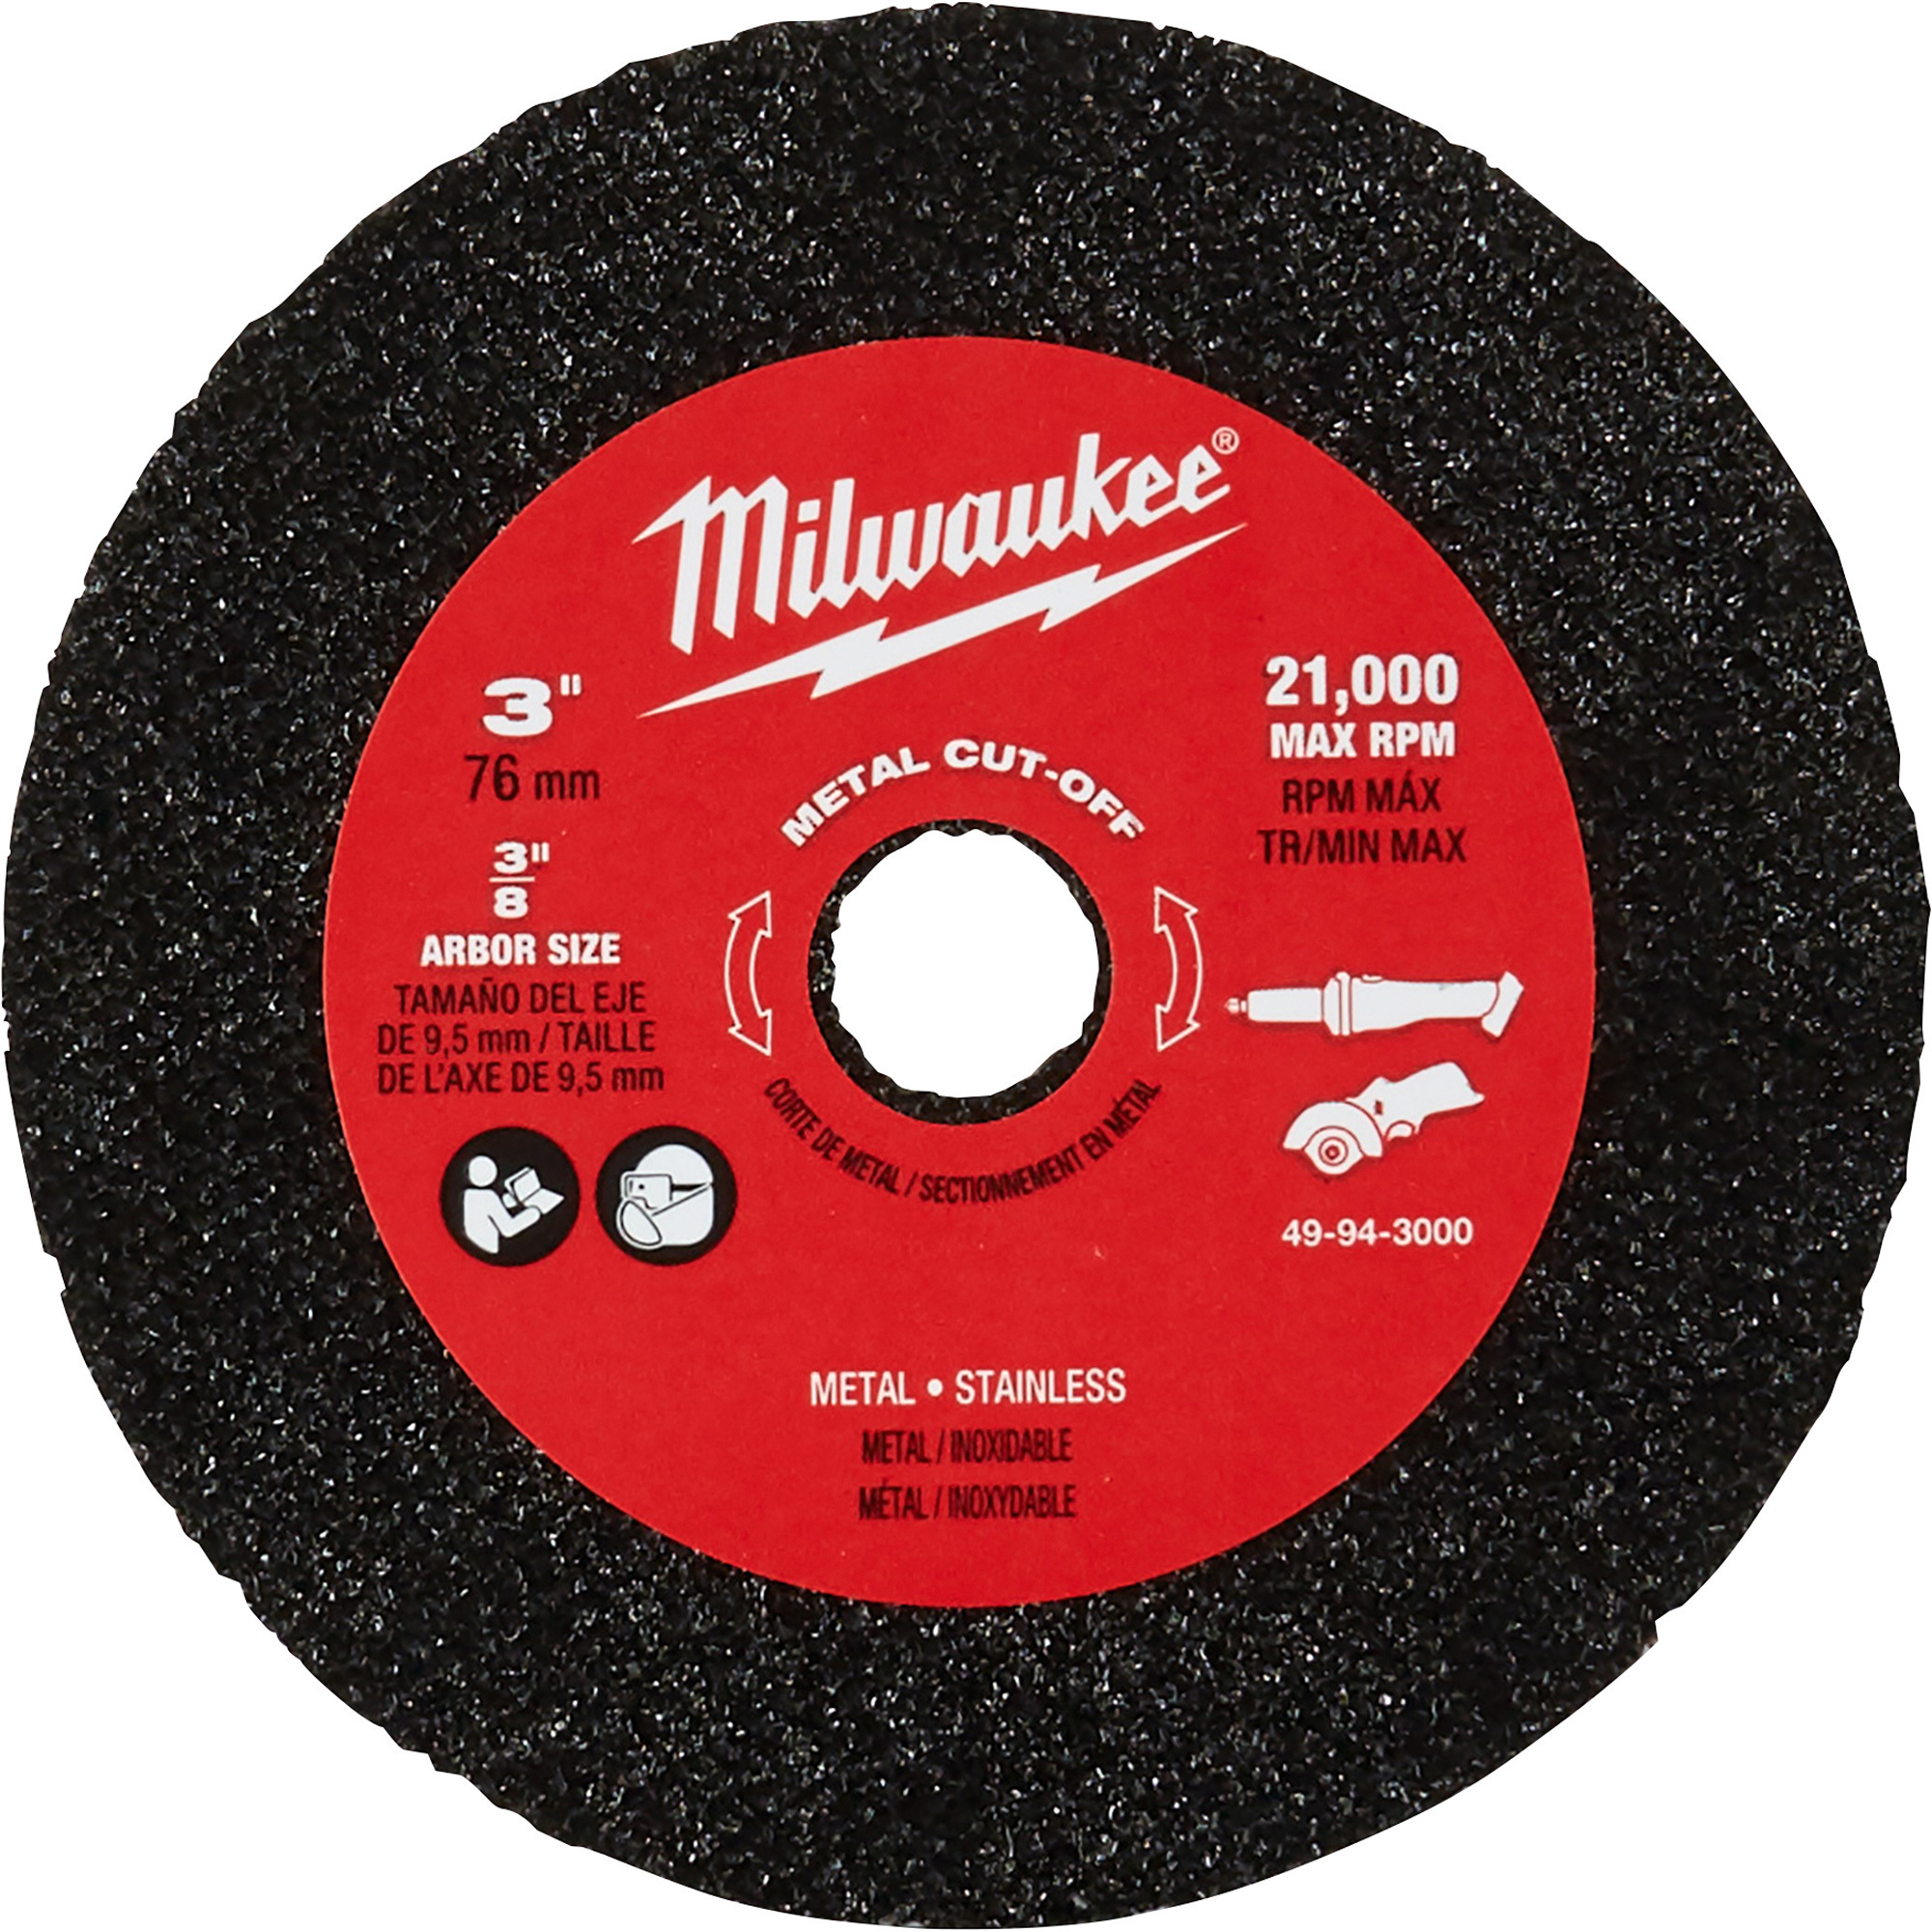 Milwaukee 3Inch Metal Cut-Off Wheels, 3-Pack, 20,000 RPM, Model 49-94-3000